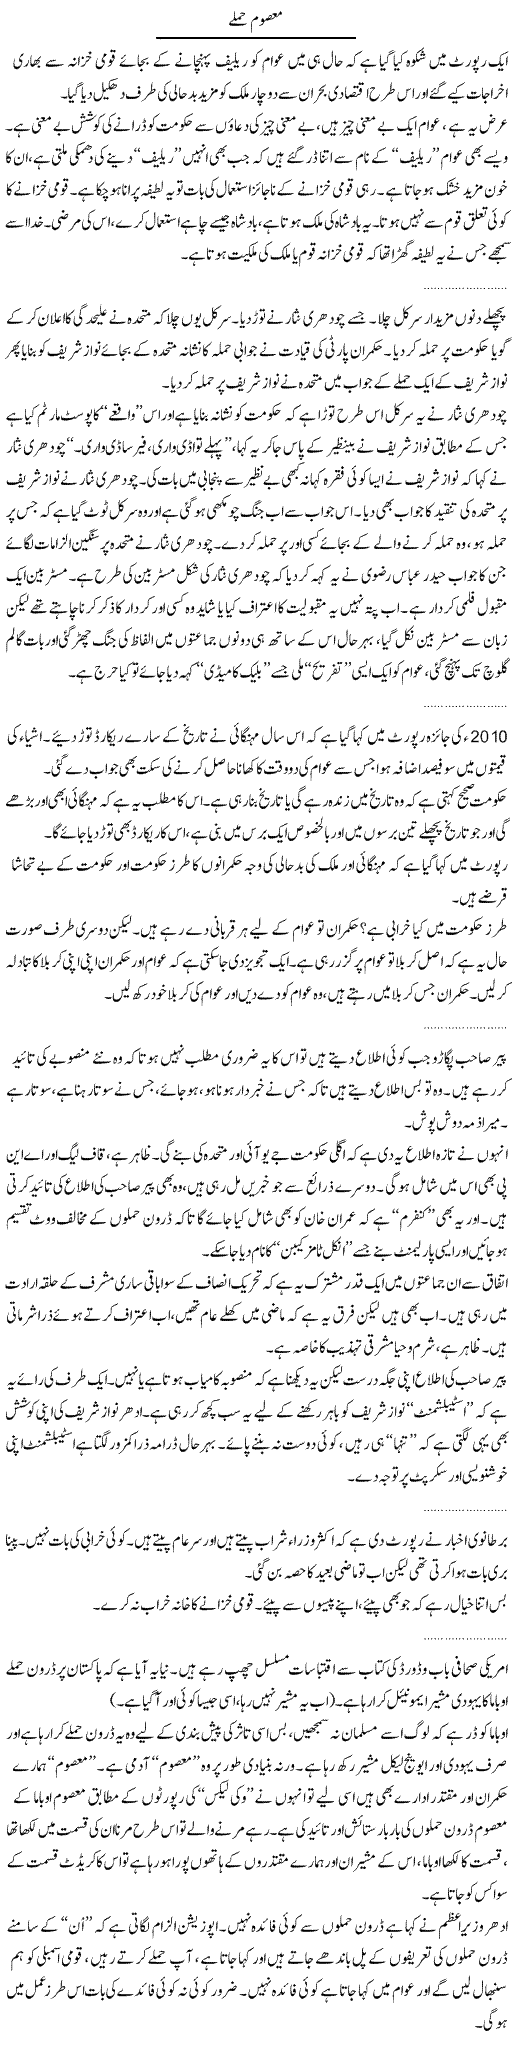 Innocent Attacks Express Column Abdullah Tariq 31 December 2010